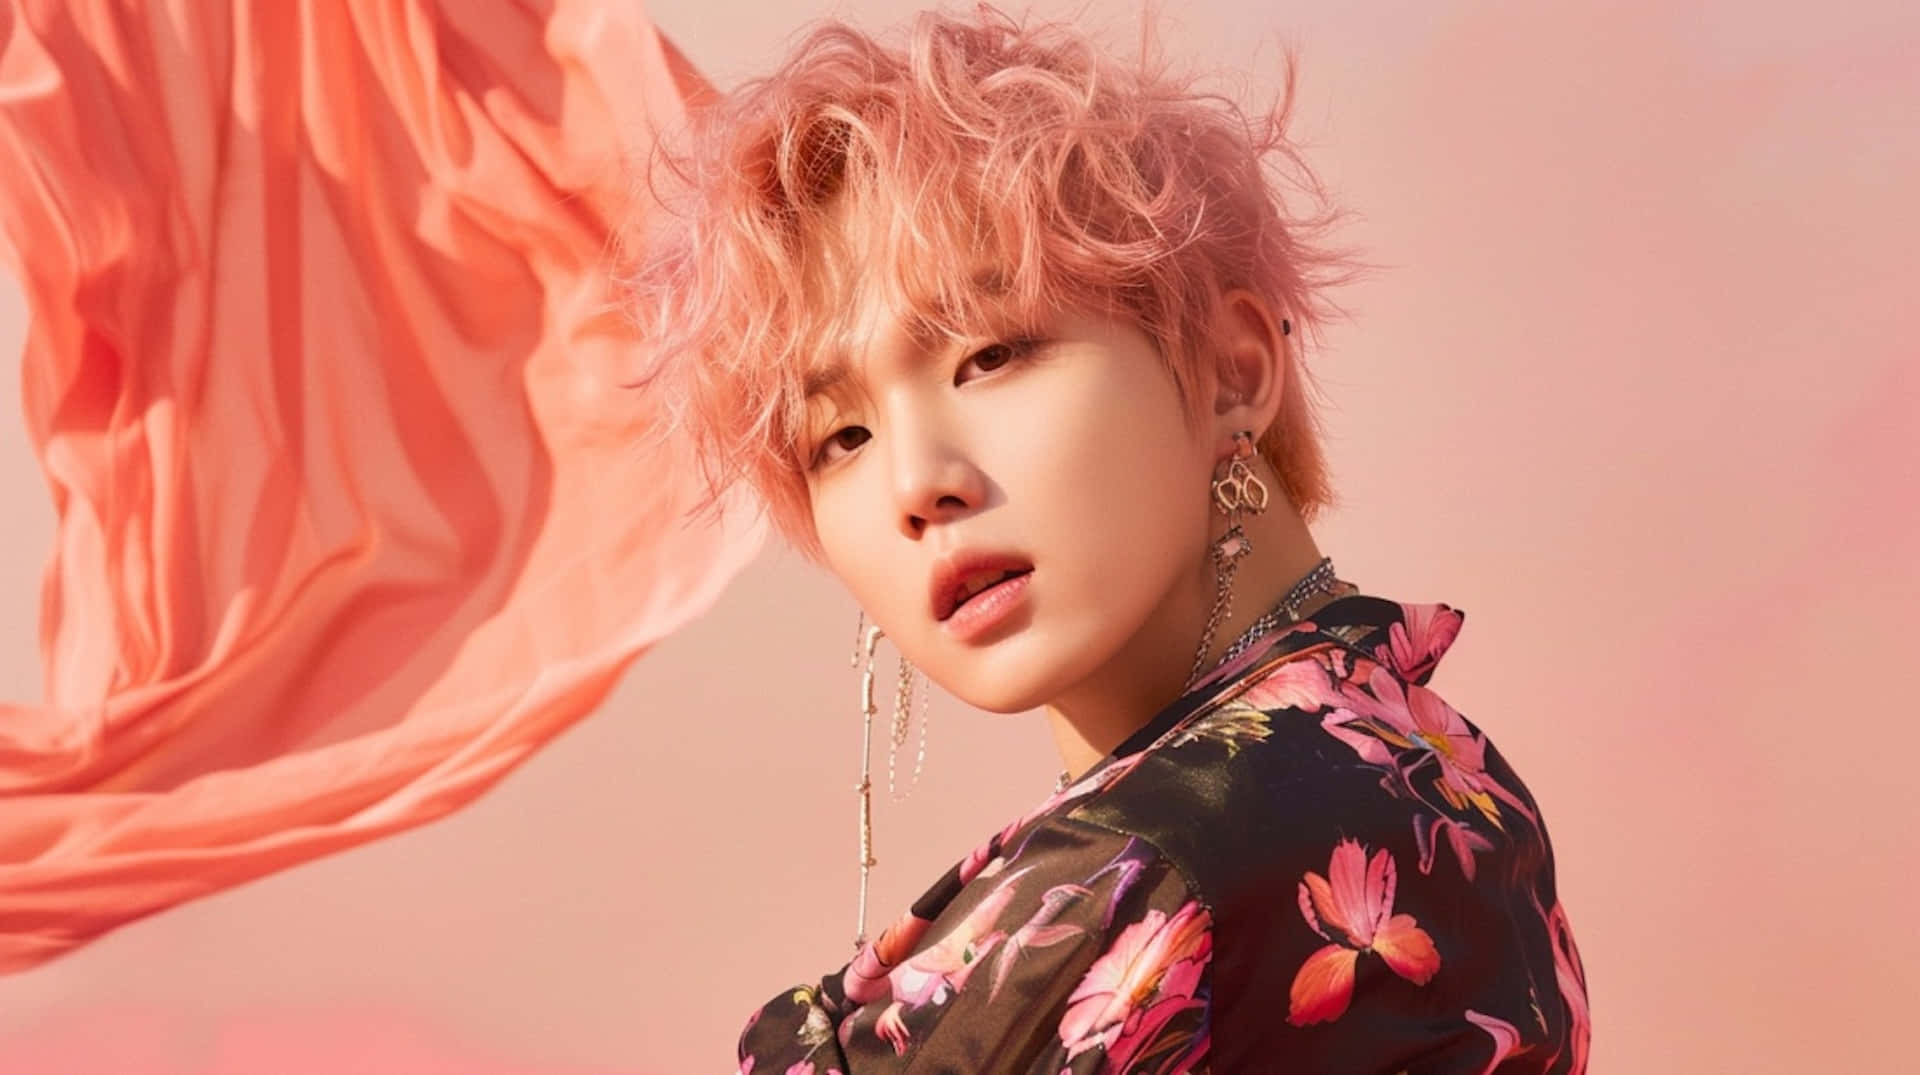 Pink Haired Music Artist Aesthetic Wallpaper